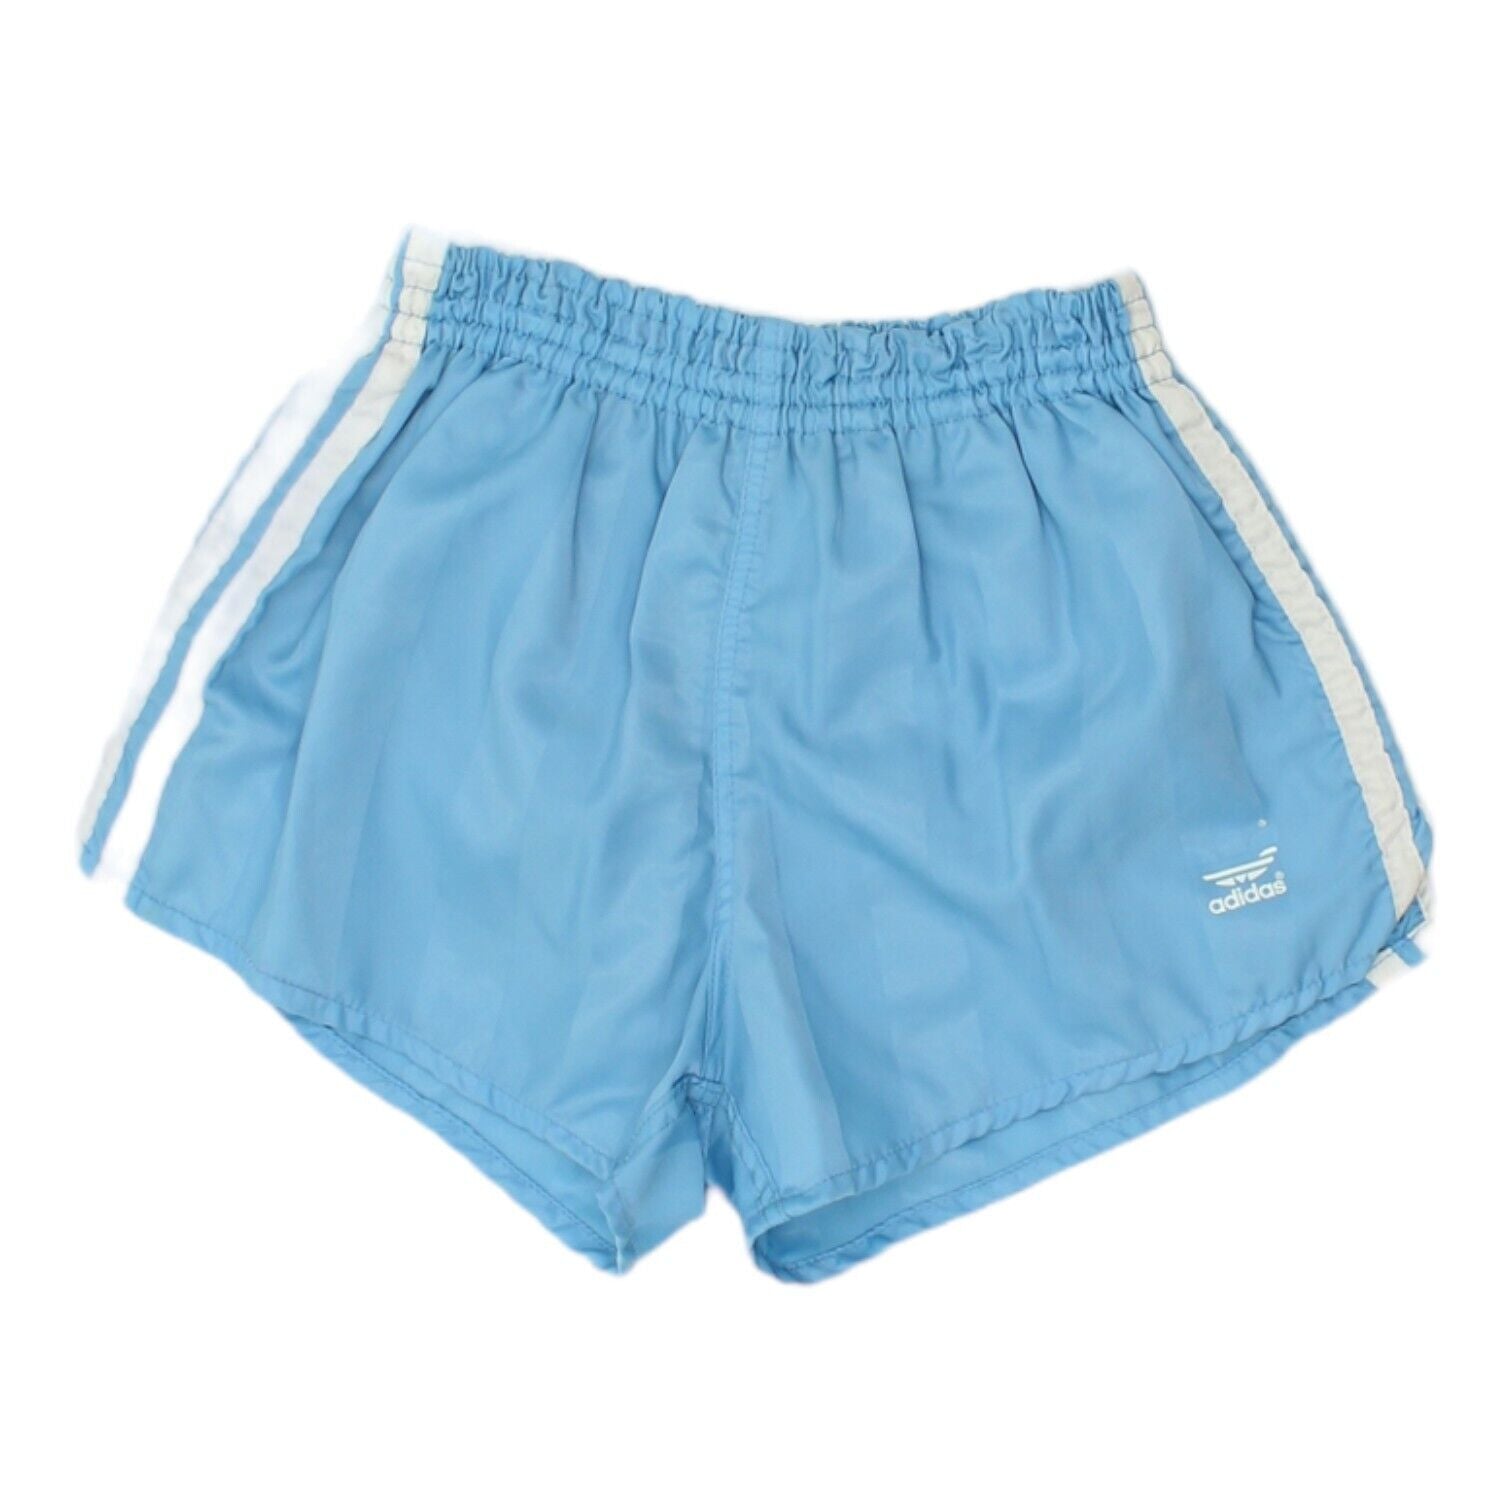 Adidas Originals Mens Blue Nylon Running Shorts, Vintage 80s Sportswear, Vintage & Second-Hand Clothing Online